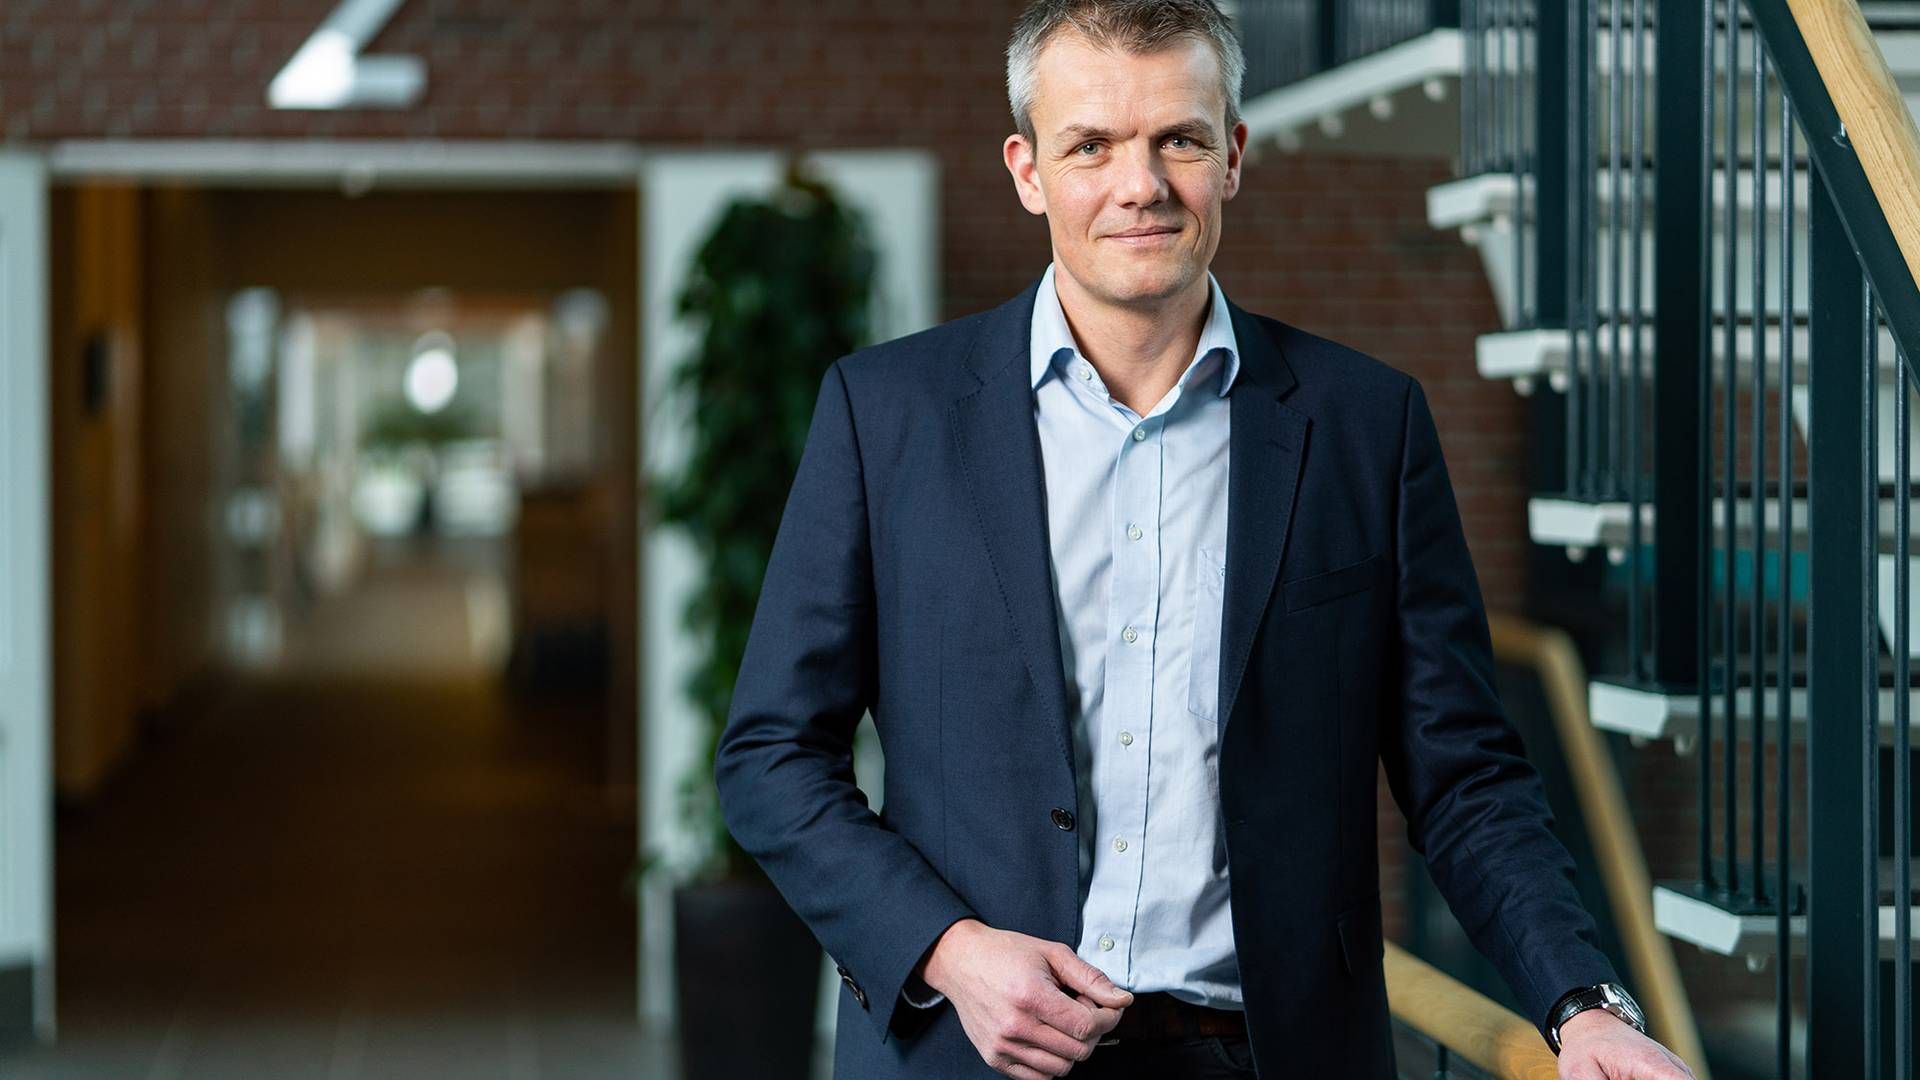 Adm. direktør for NMD Pharma, Thomas Holm Pedersen. | Foto: Nmd Pharma / Pr